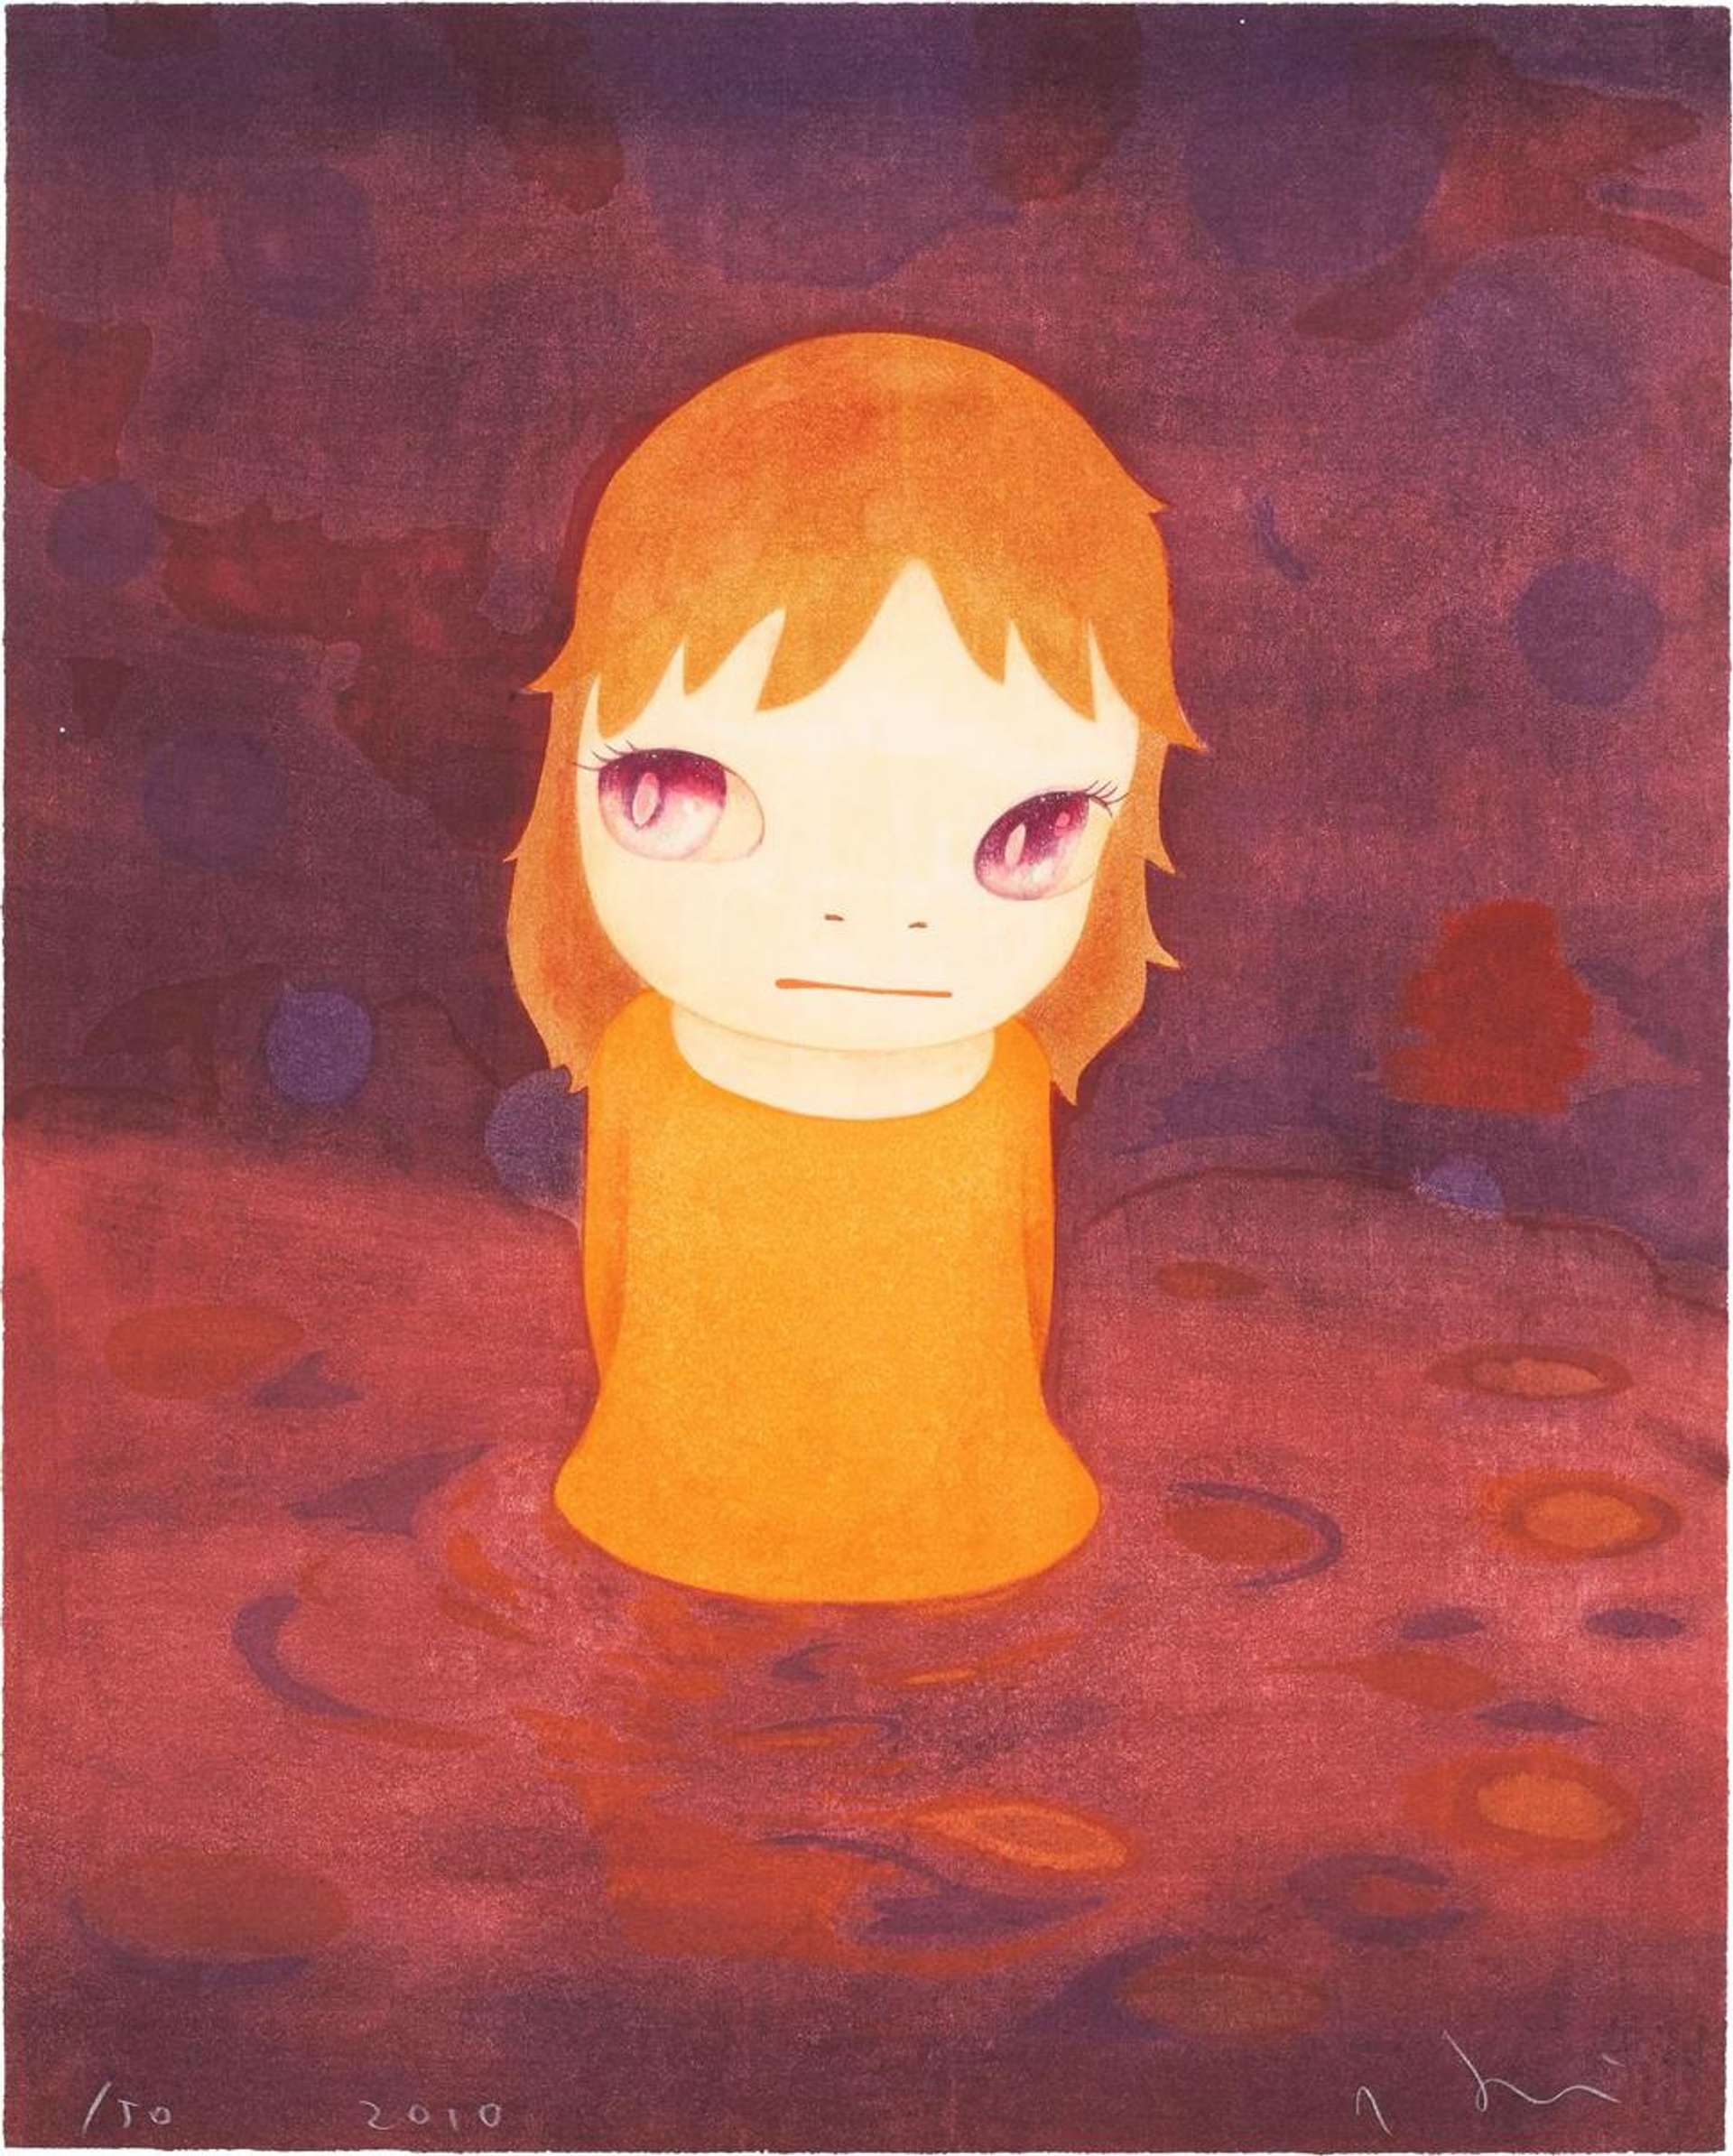 Yoshitomo Nara: After The Acid Rain (Night) - Signed Print